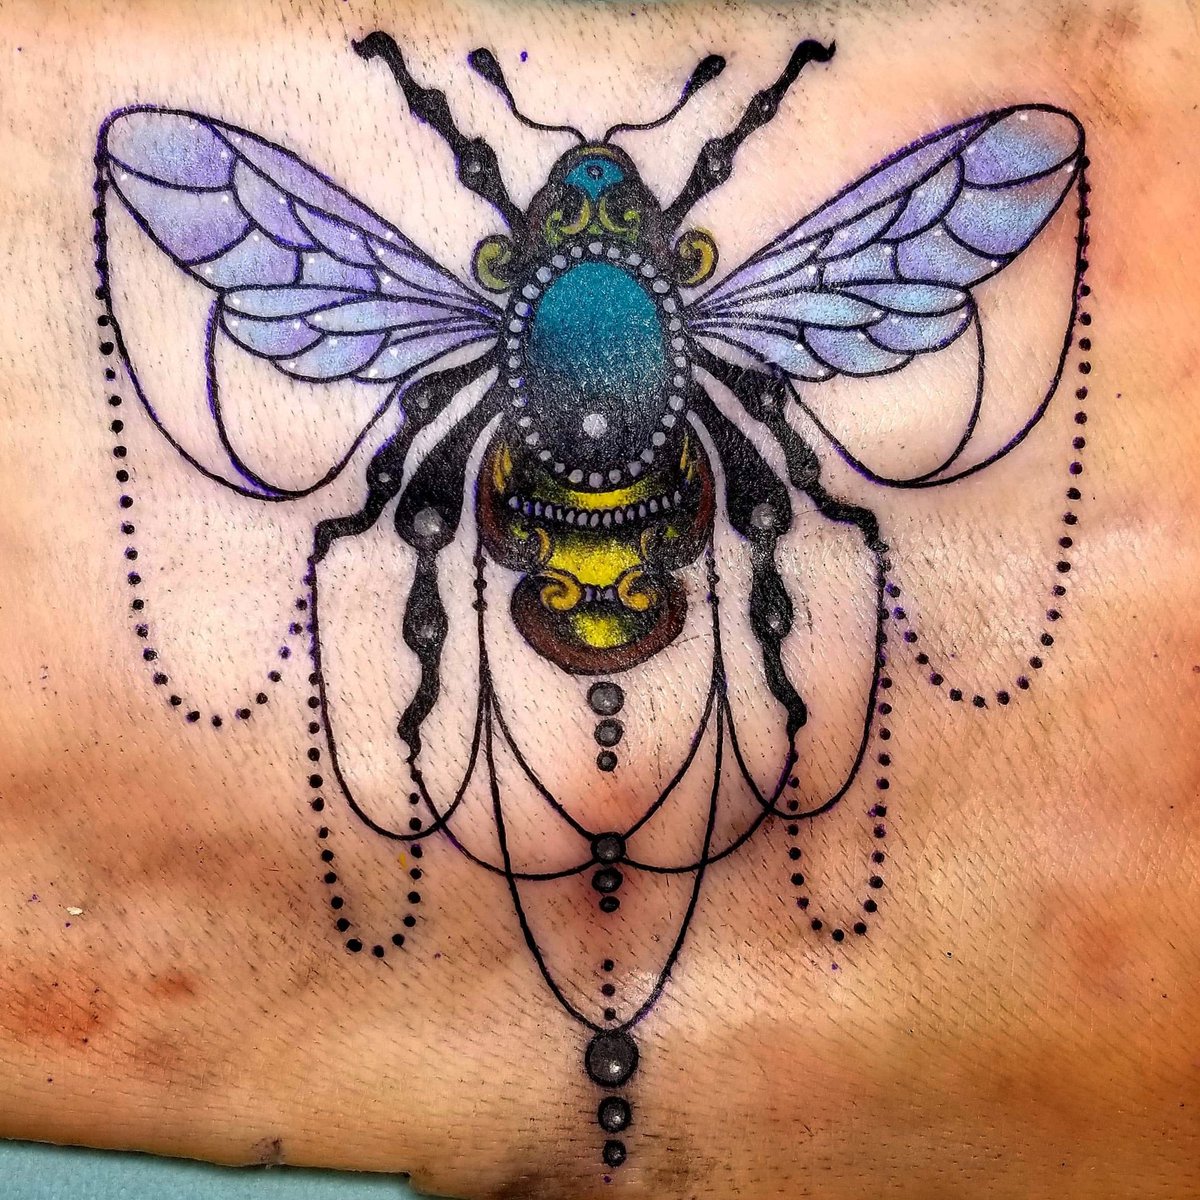 Bee-lieve in yourself 🐝

#tattooartist #tattoos #tattoo #ArtistOnTwitter #bumblebee #beetattoo